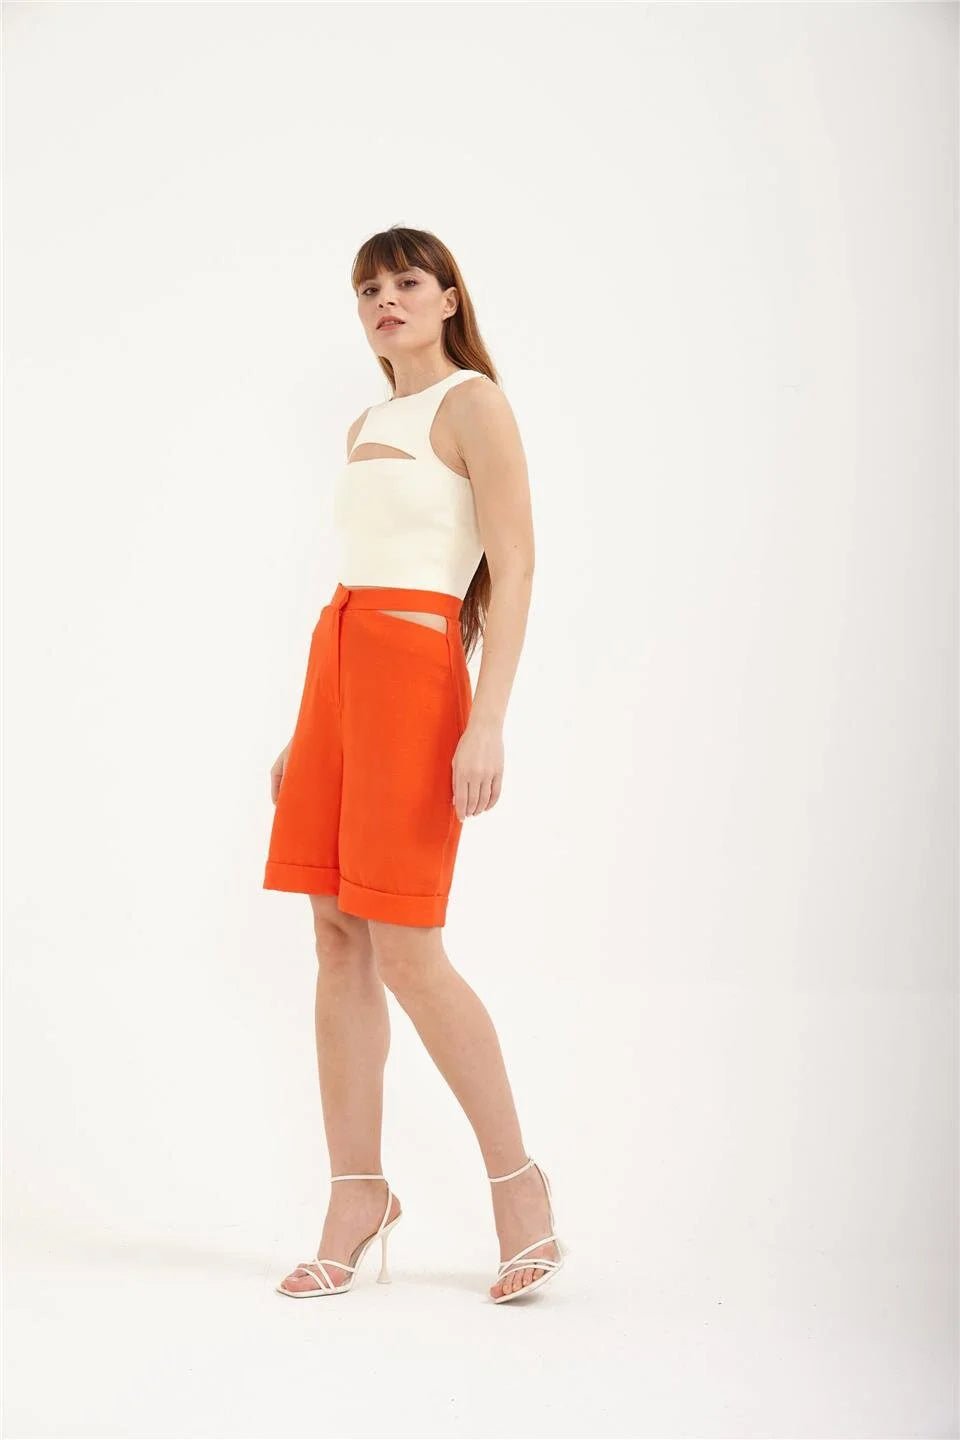 Aroura Shorts - Orange - Bottom - LussoCA